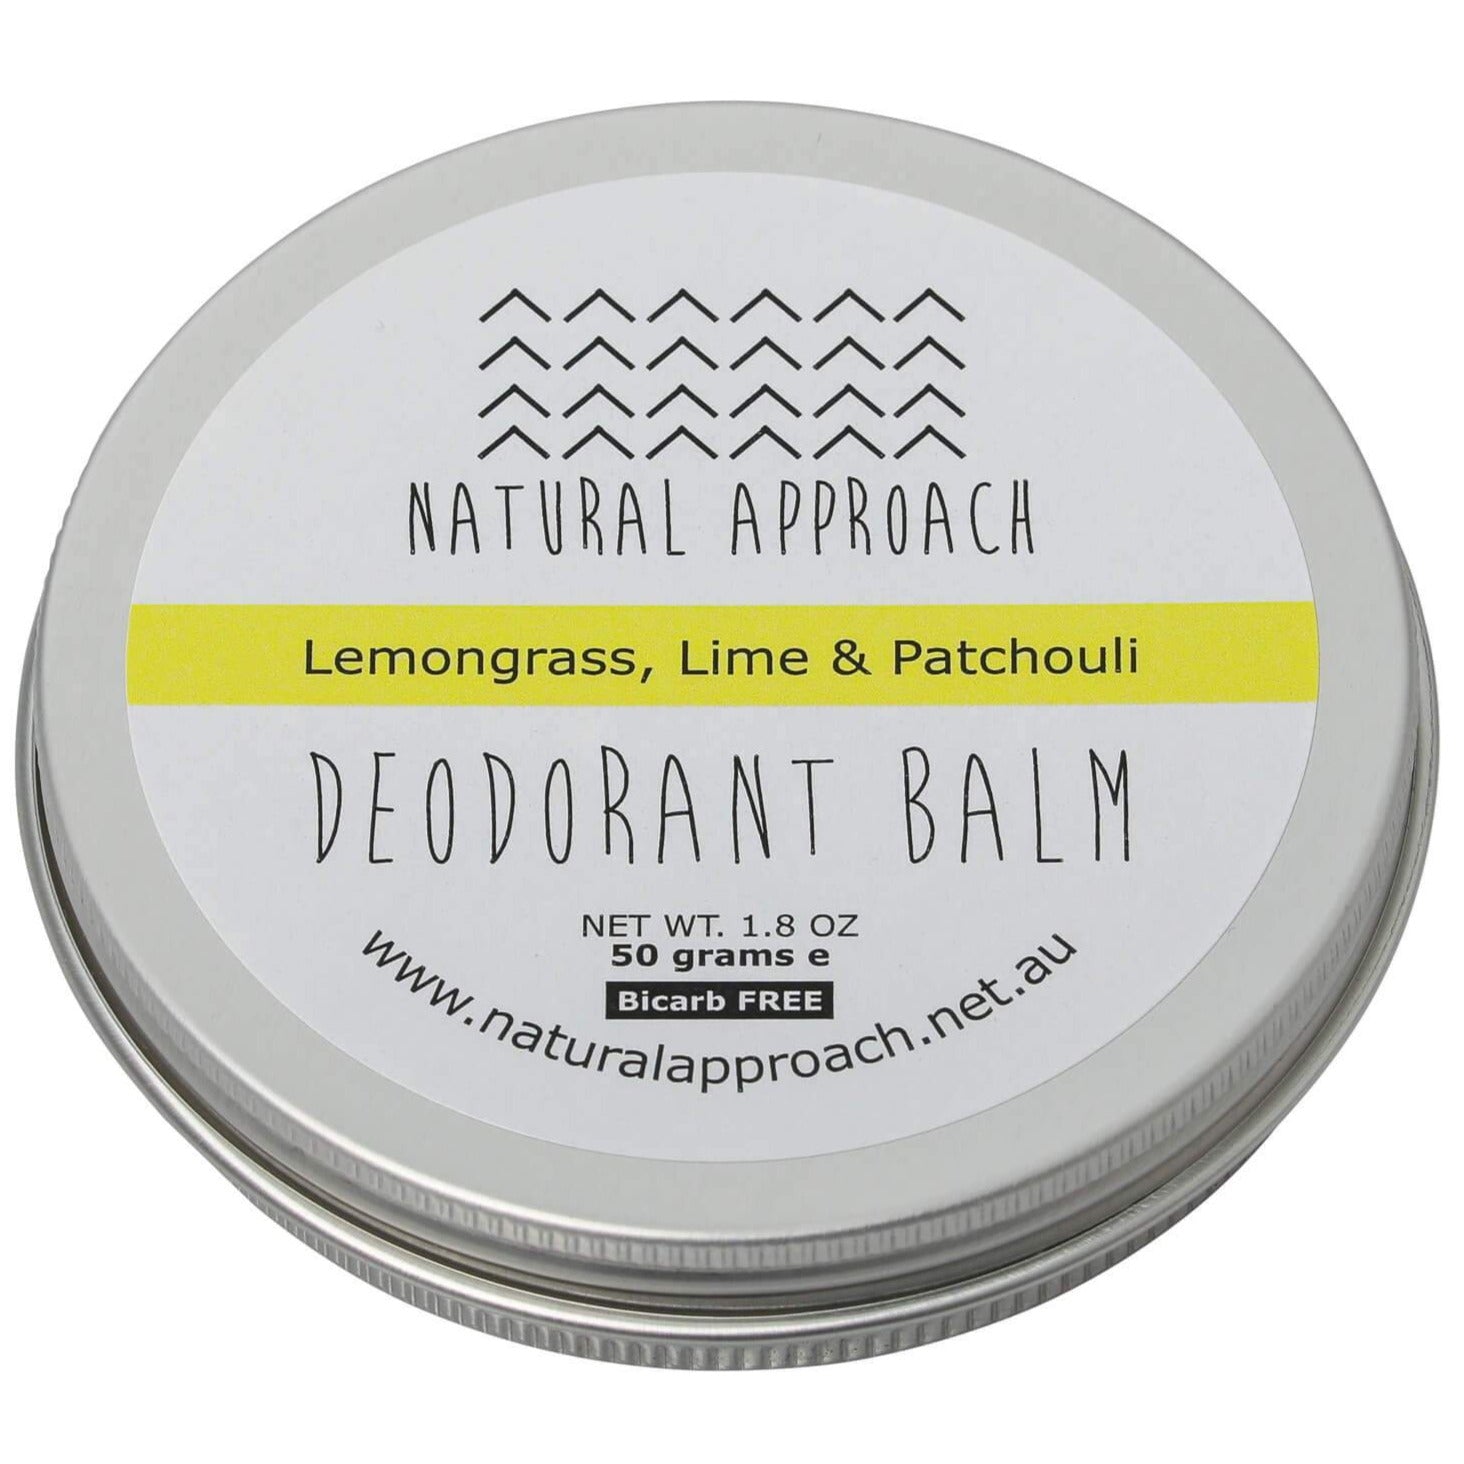 Lemongrass, Lime and Patchouli natural deodorant balm